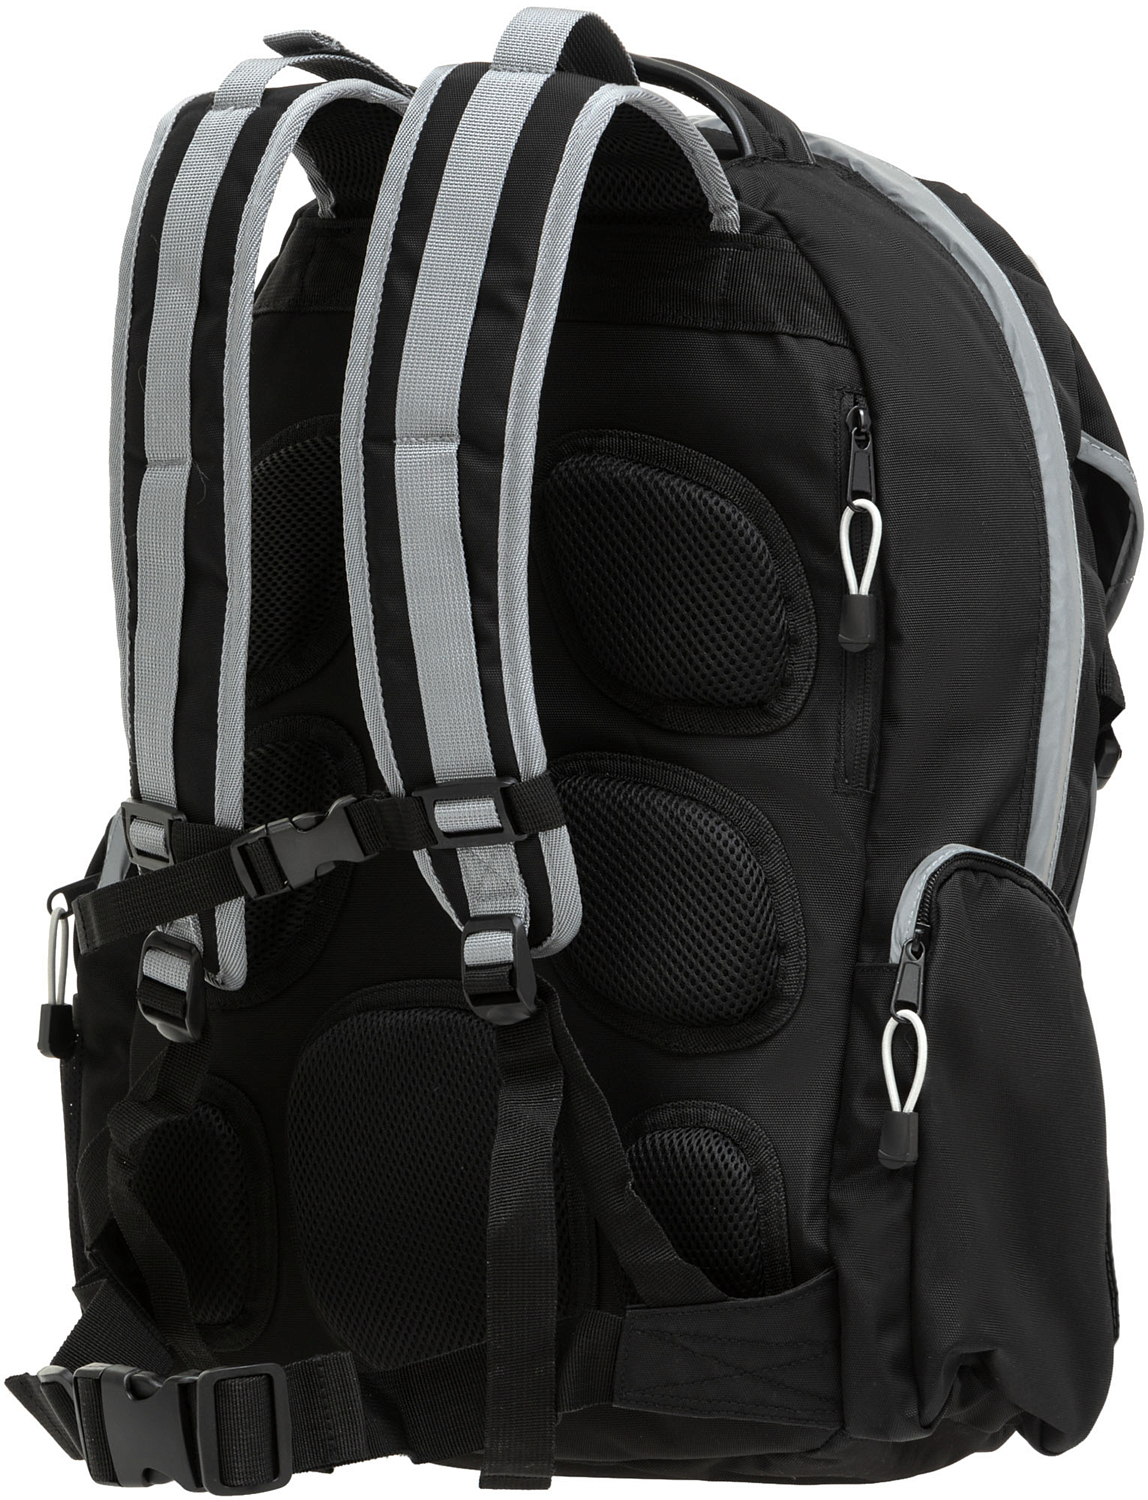 Рюкзак для роликов Powerslide Sports Backpack Black